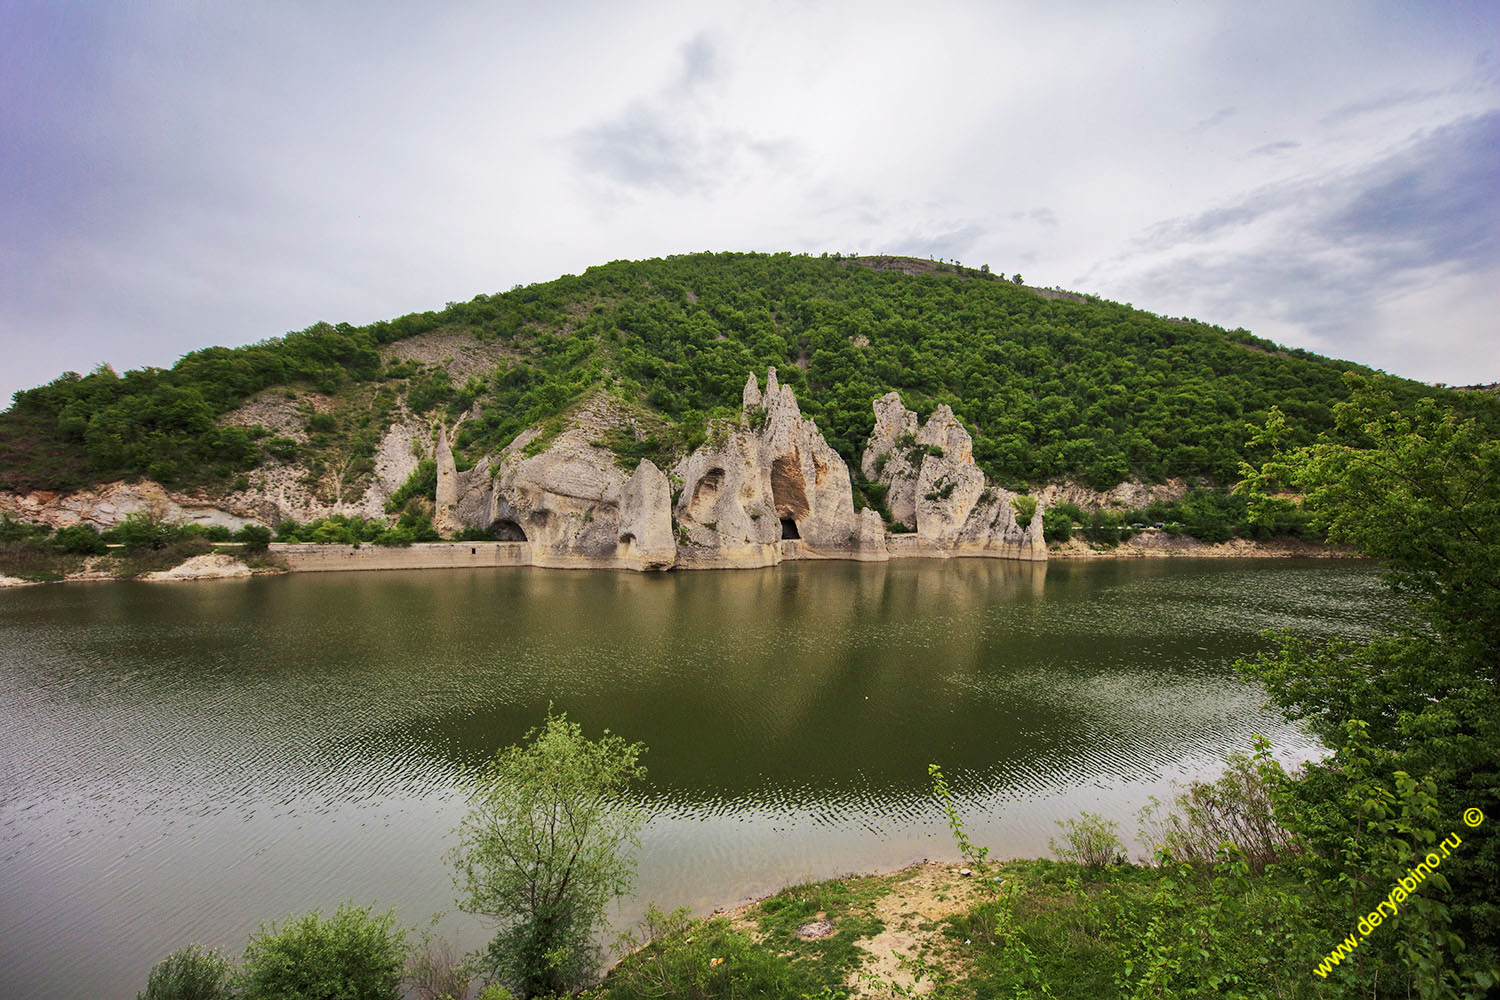   Wonderful Rocks  Bulgaria